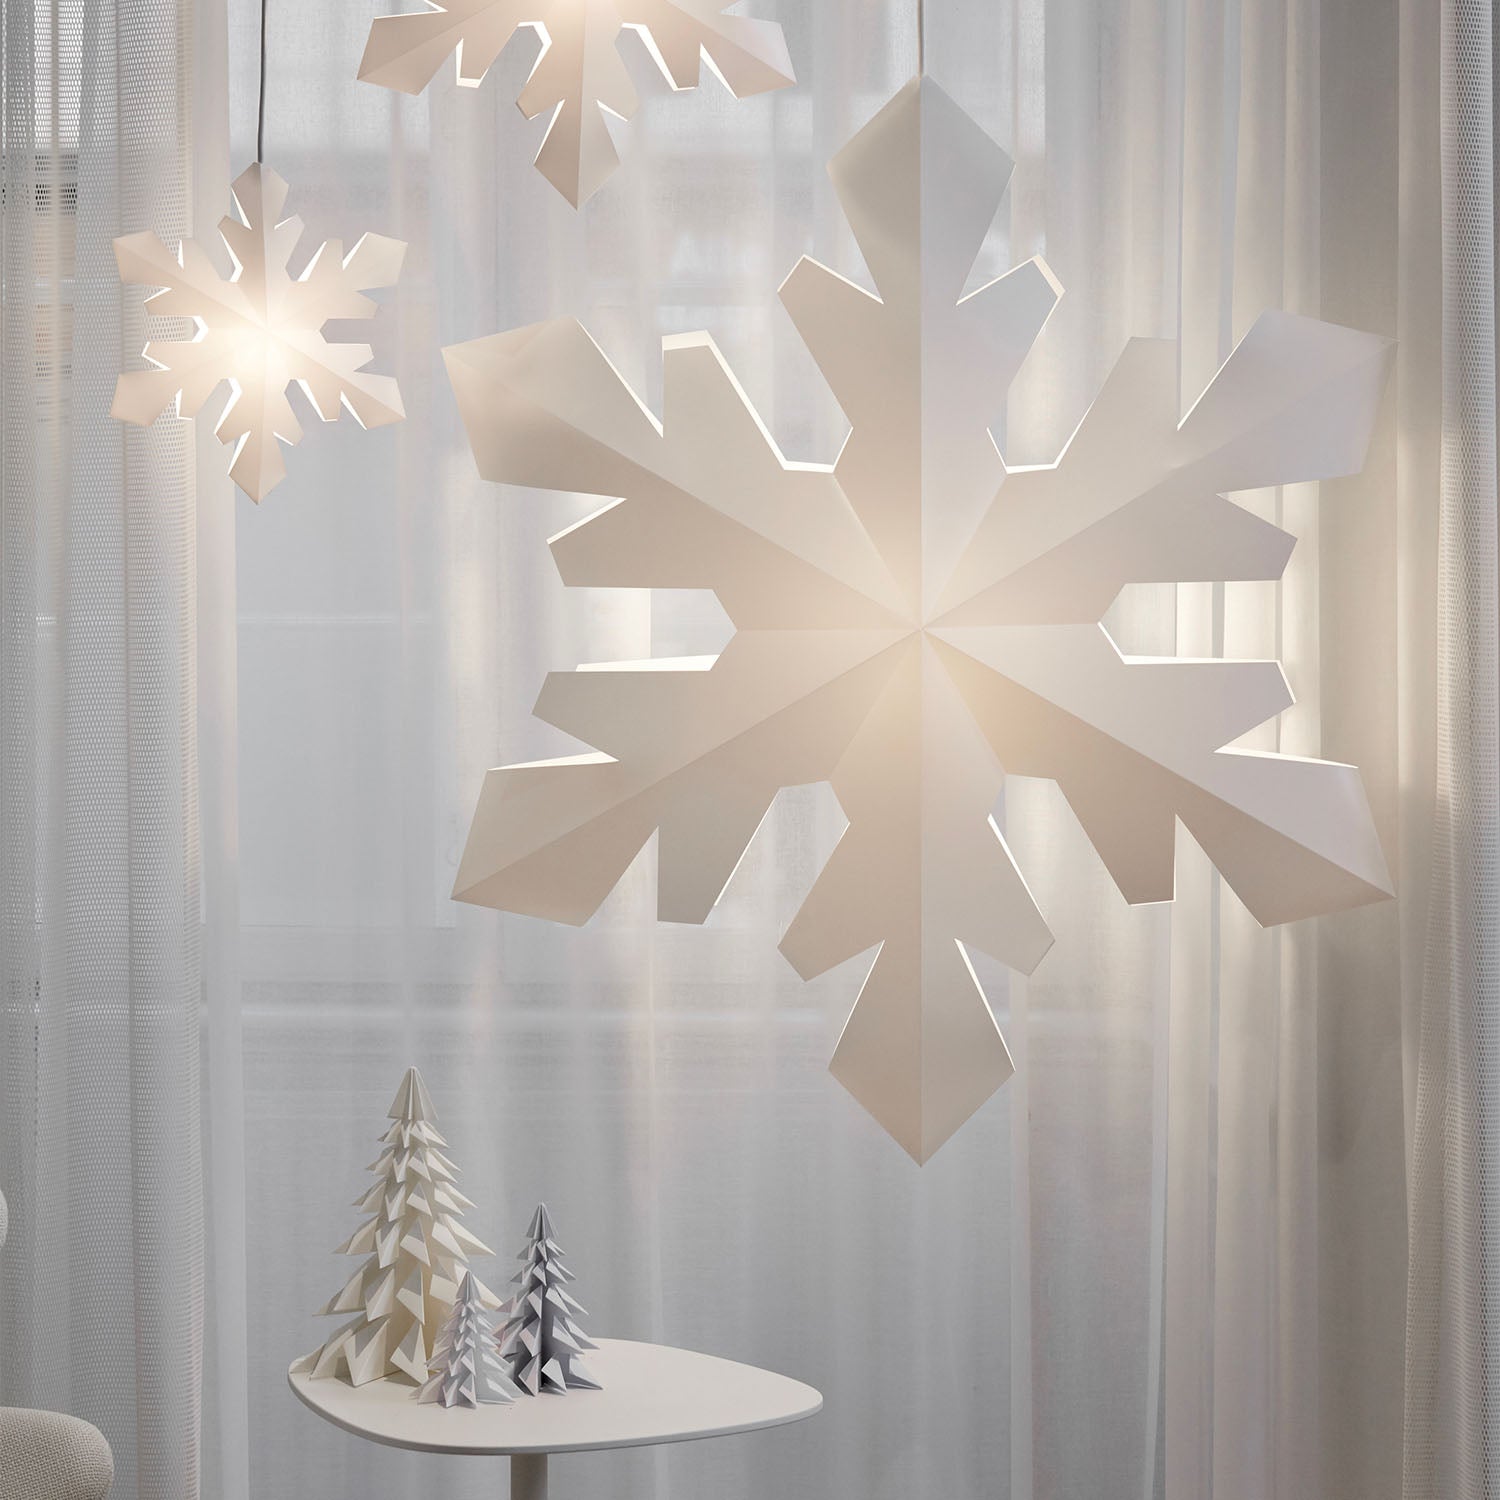 SNOWFLAKE - Christmas snowflake pendant light, handmade in PVC